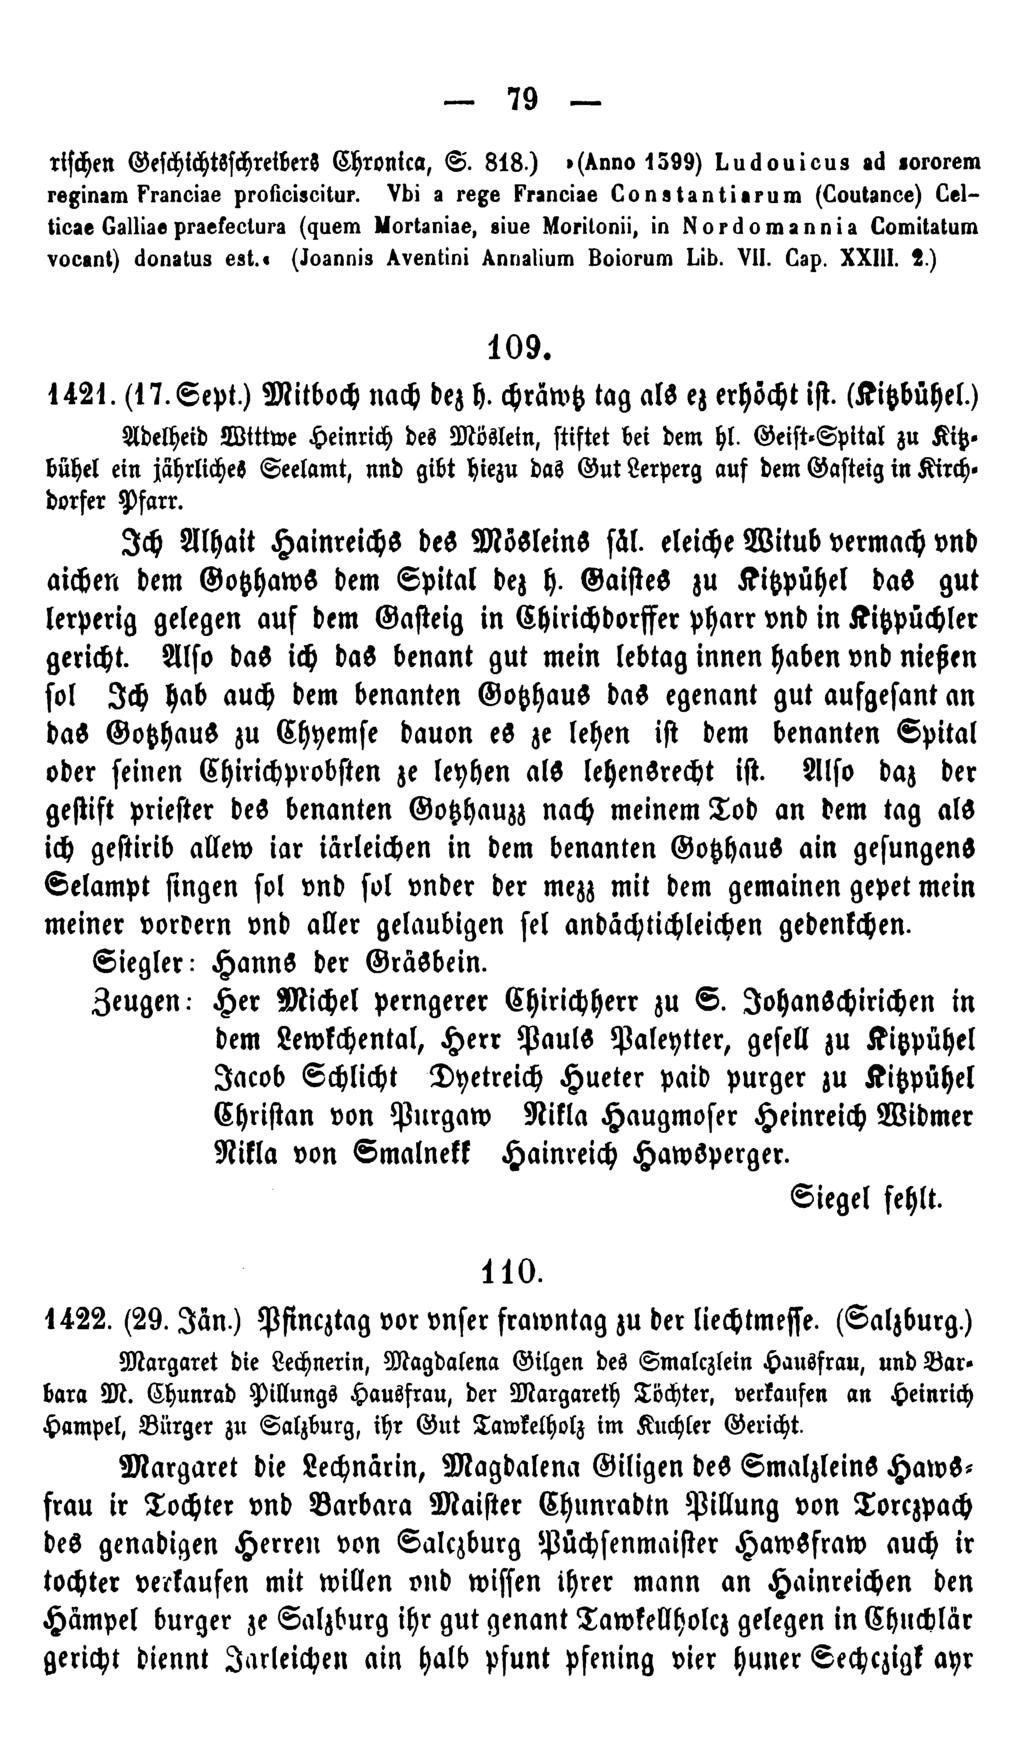 79 rischen Geschichtsschreibers Chronica, S. 818.)»(Anno 1599) Ludouicus ad lororem reginam Franciae proficiscitur.